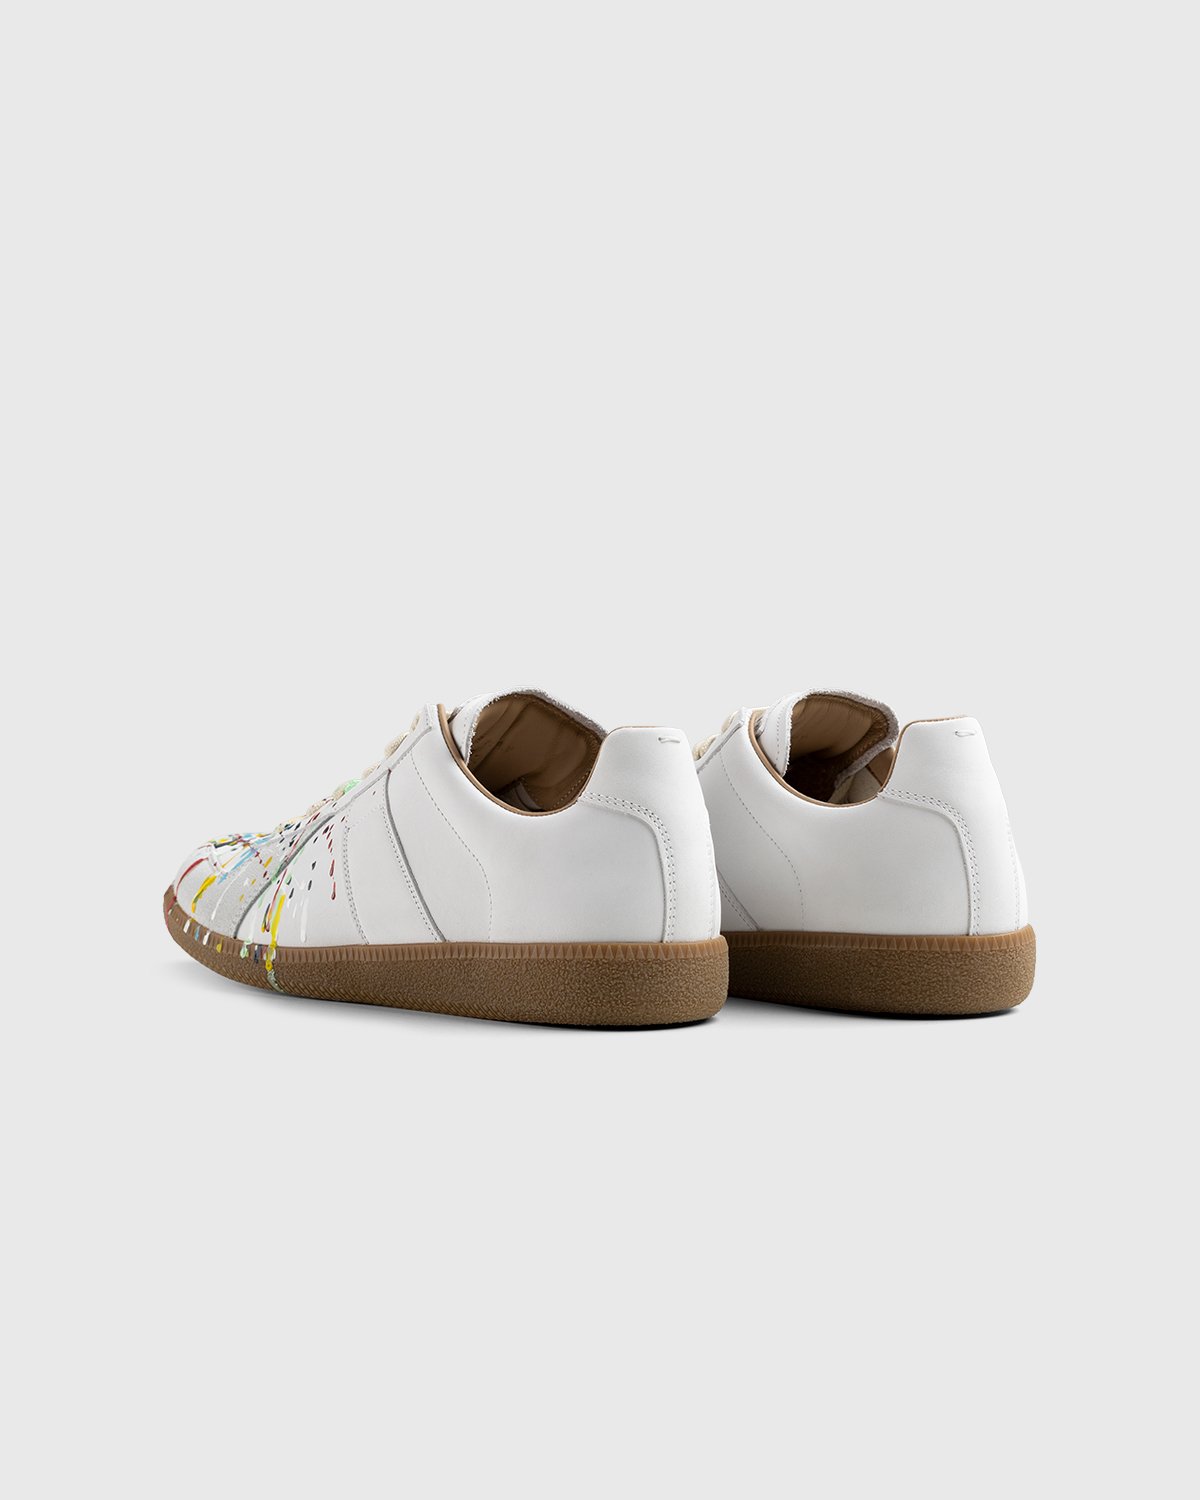 Maison Margiela - Replica Paint Drop Sneakers White - Footwear - White - Image 3